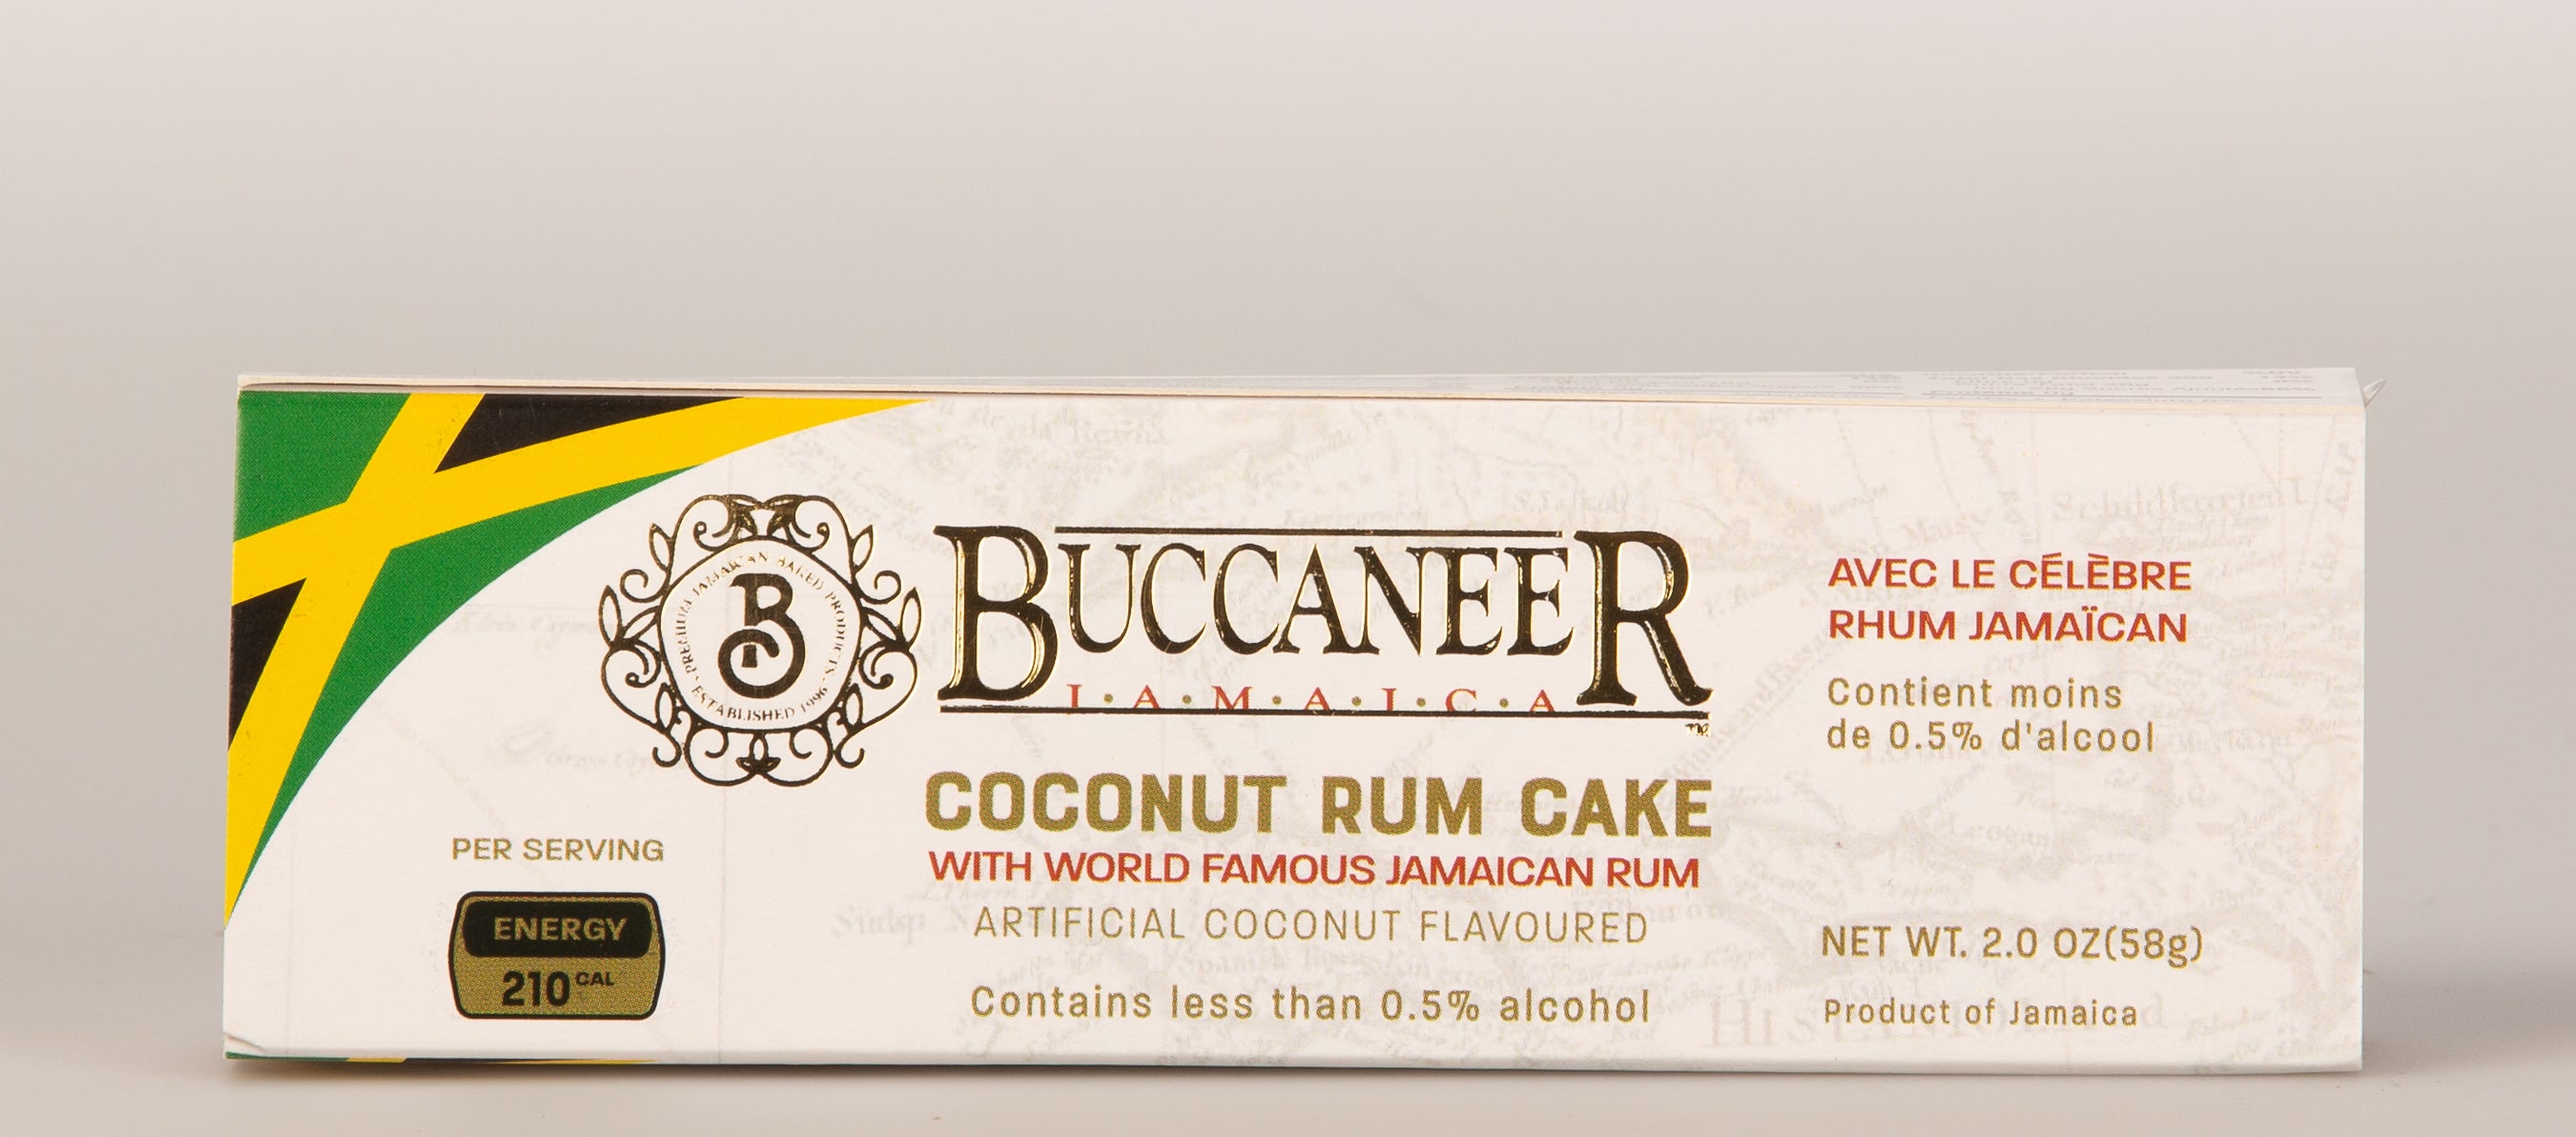 Coconut Rum Cake Box - FREE SHIPPING